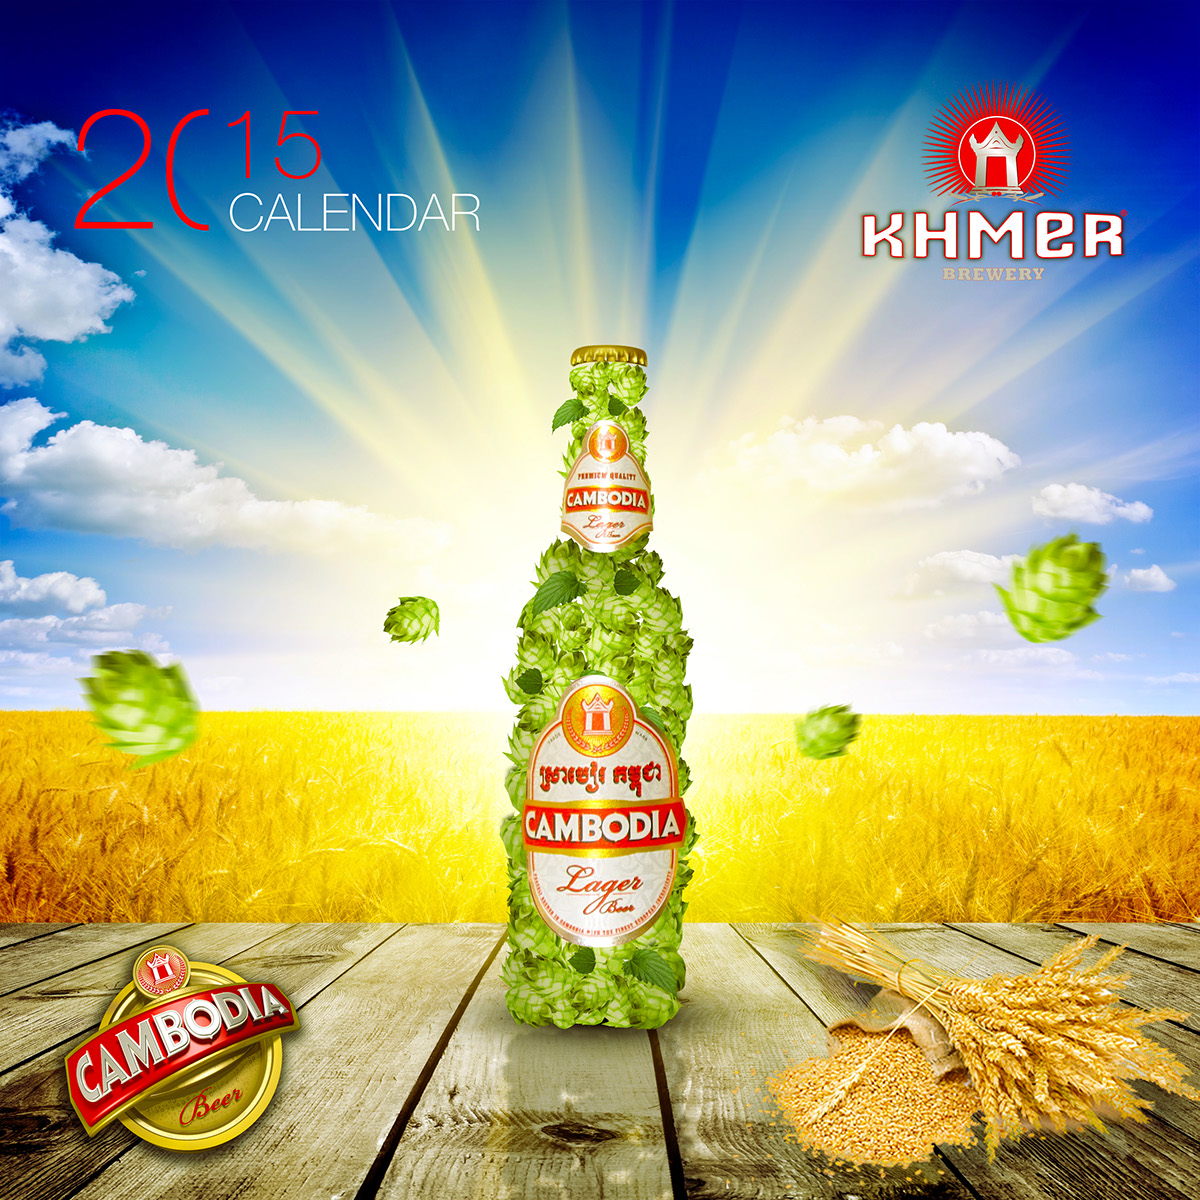 Cambodia beer calendar cover